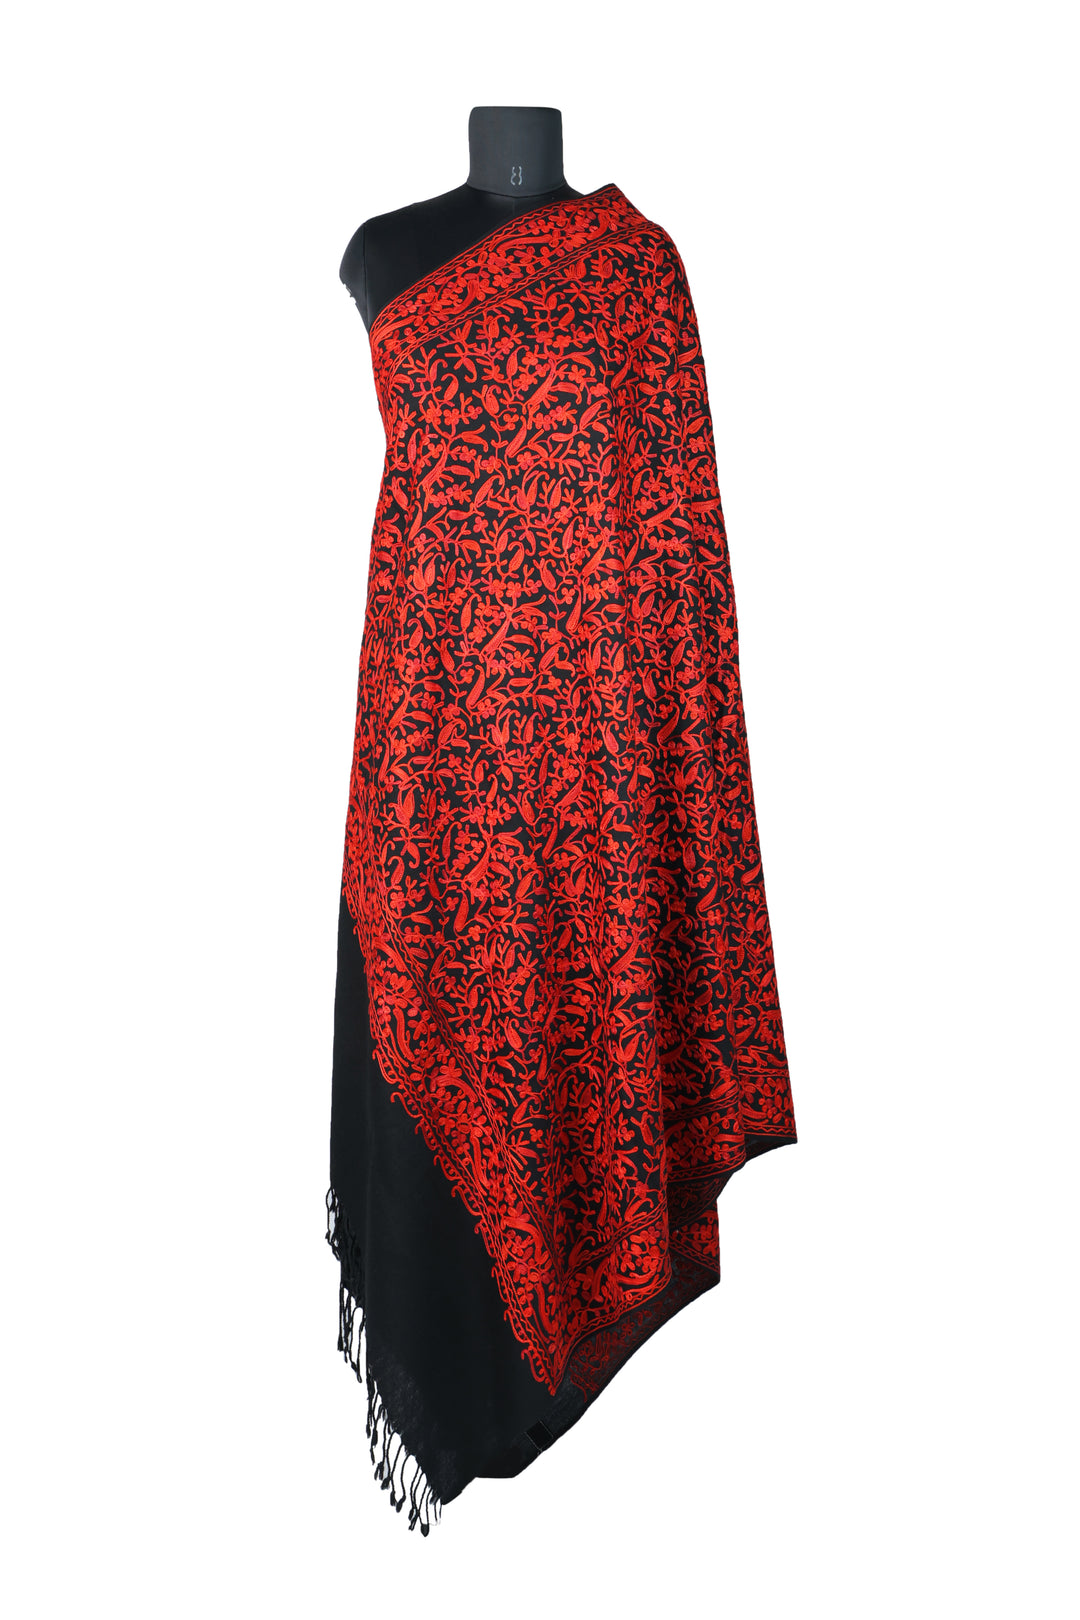 Cashmere Wool Shawl in Elegant Red & Black